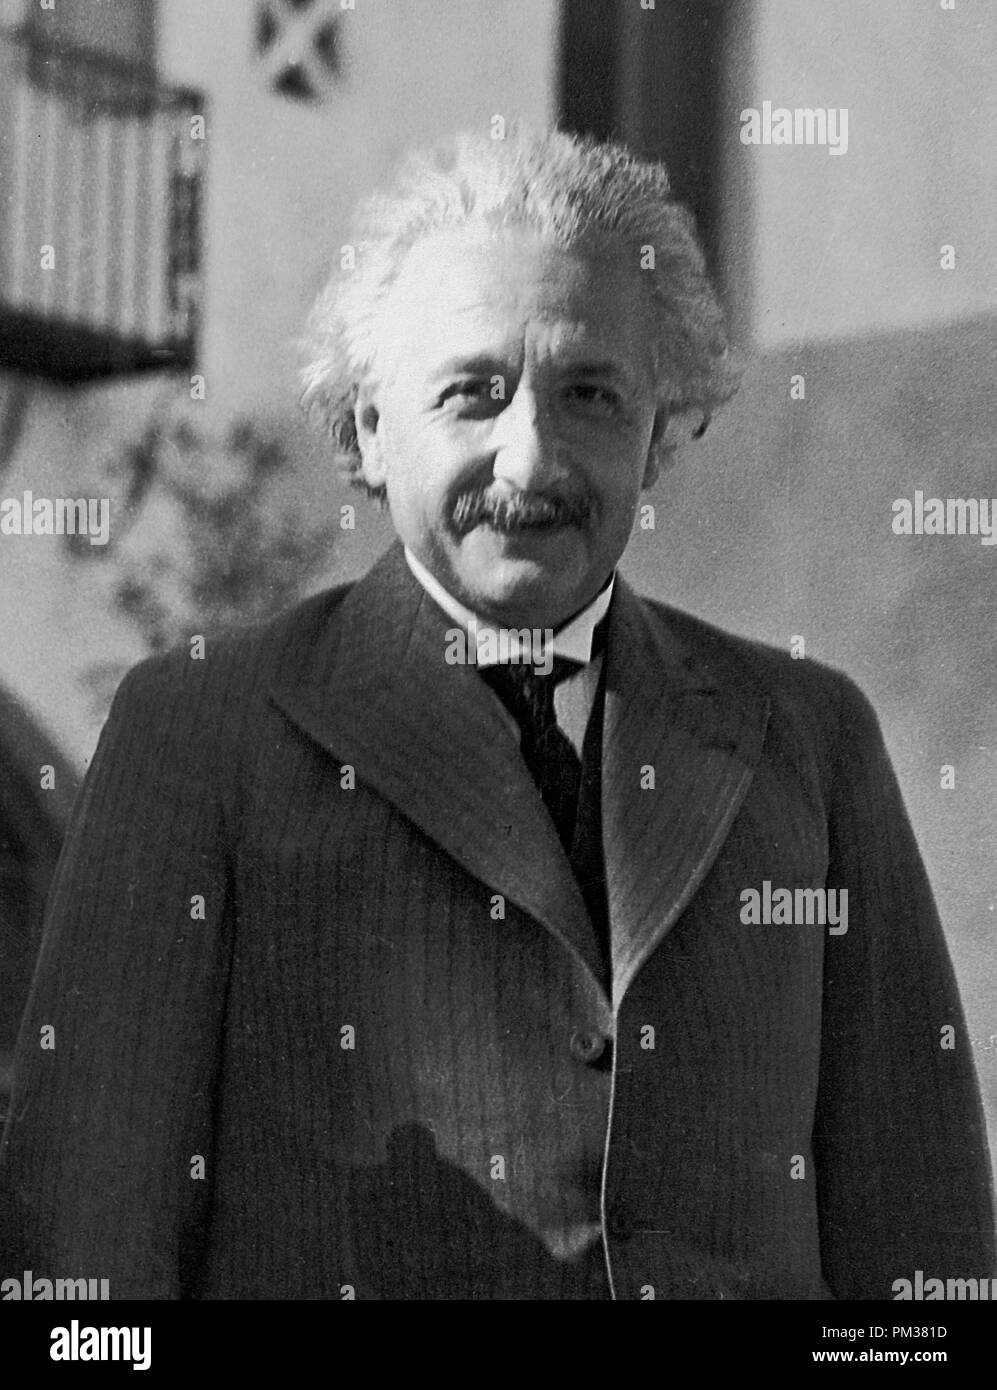 Albert Einstein c. 1930  File Reference # 1130 002THA Stock Photo